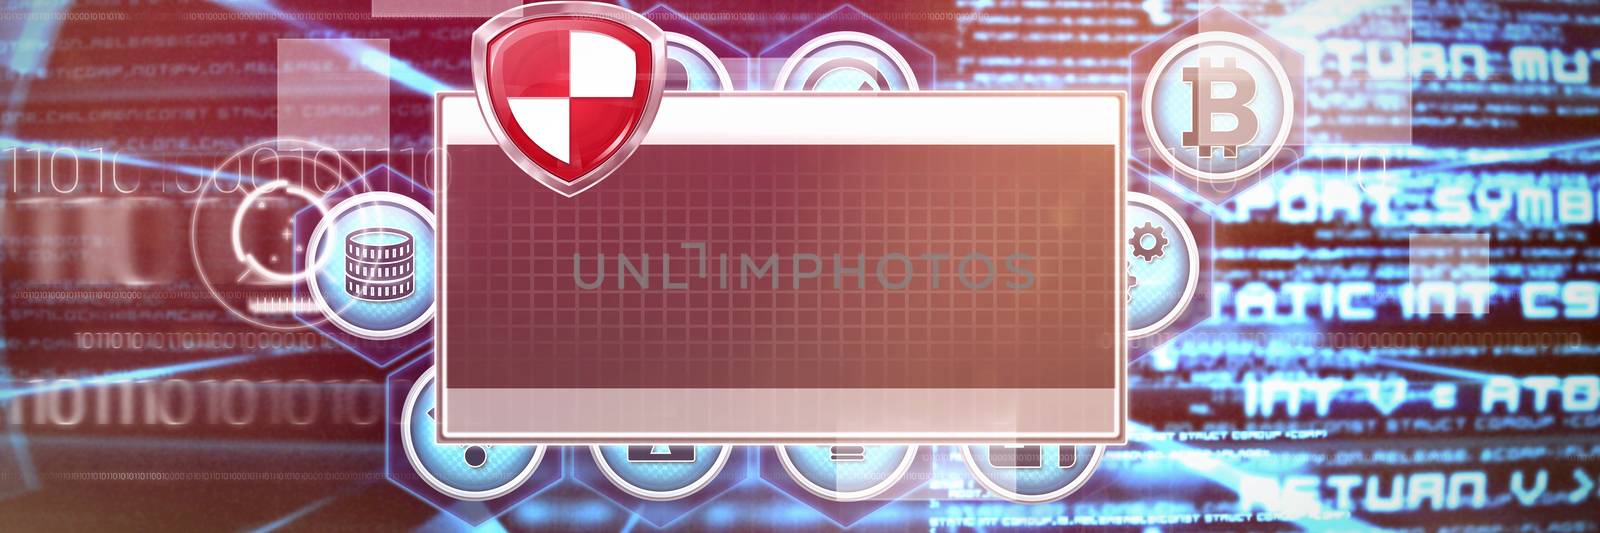 Composite image of red badge symbol by Wavebreakmedia